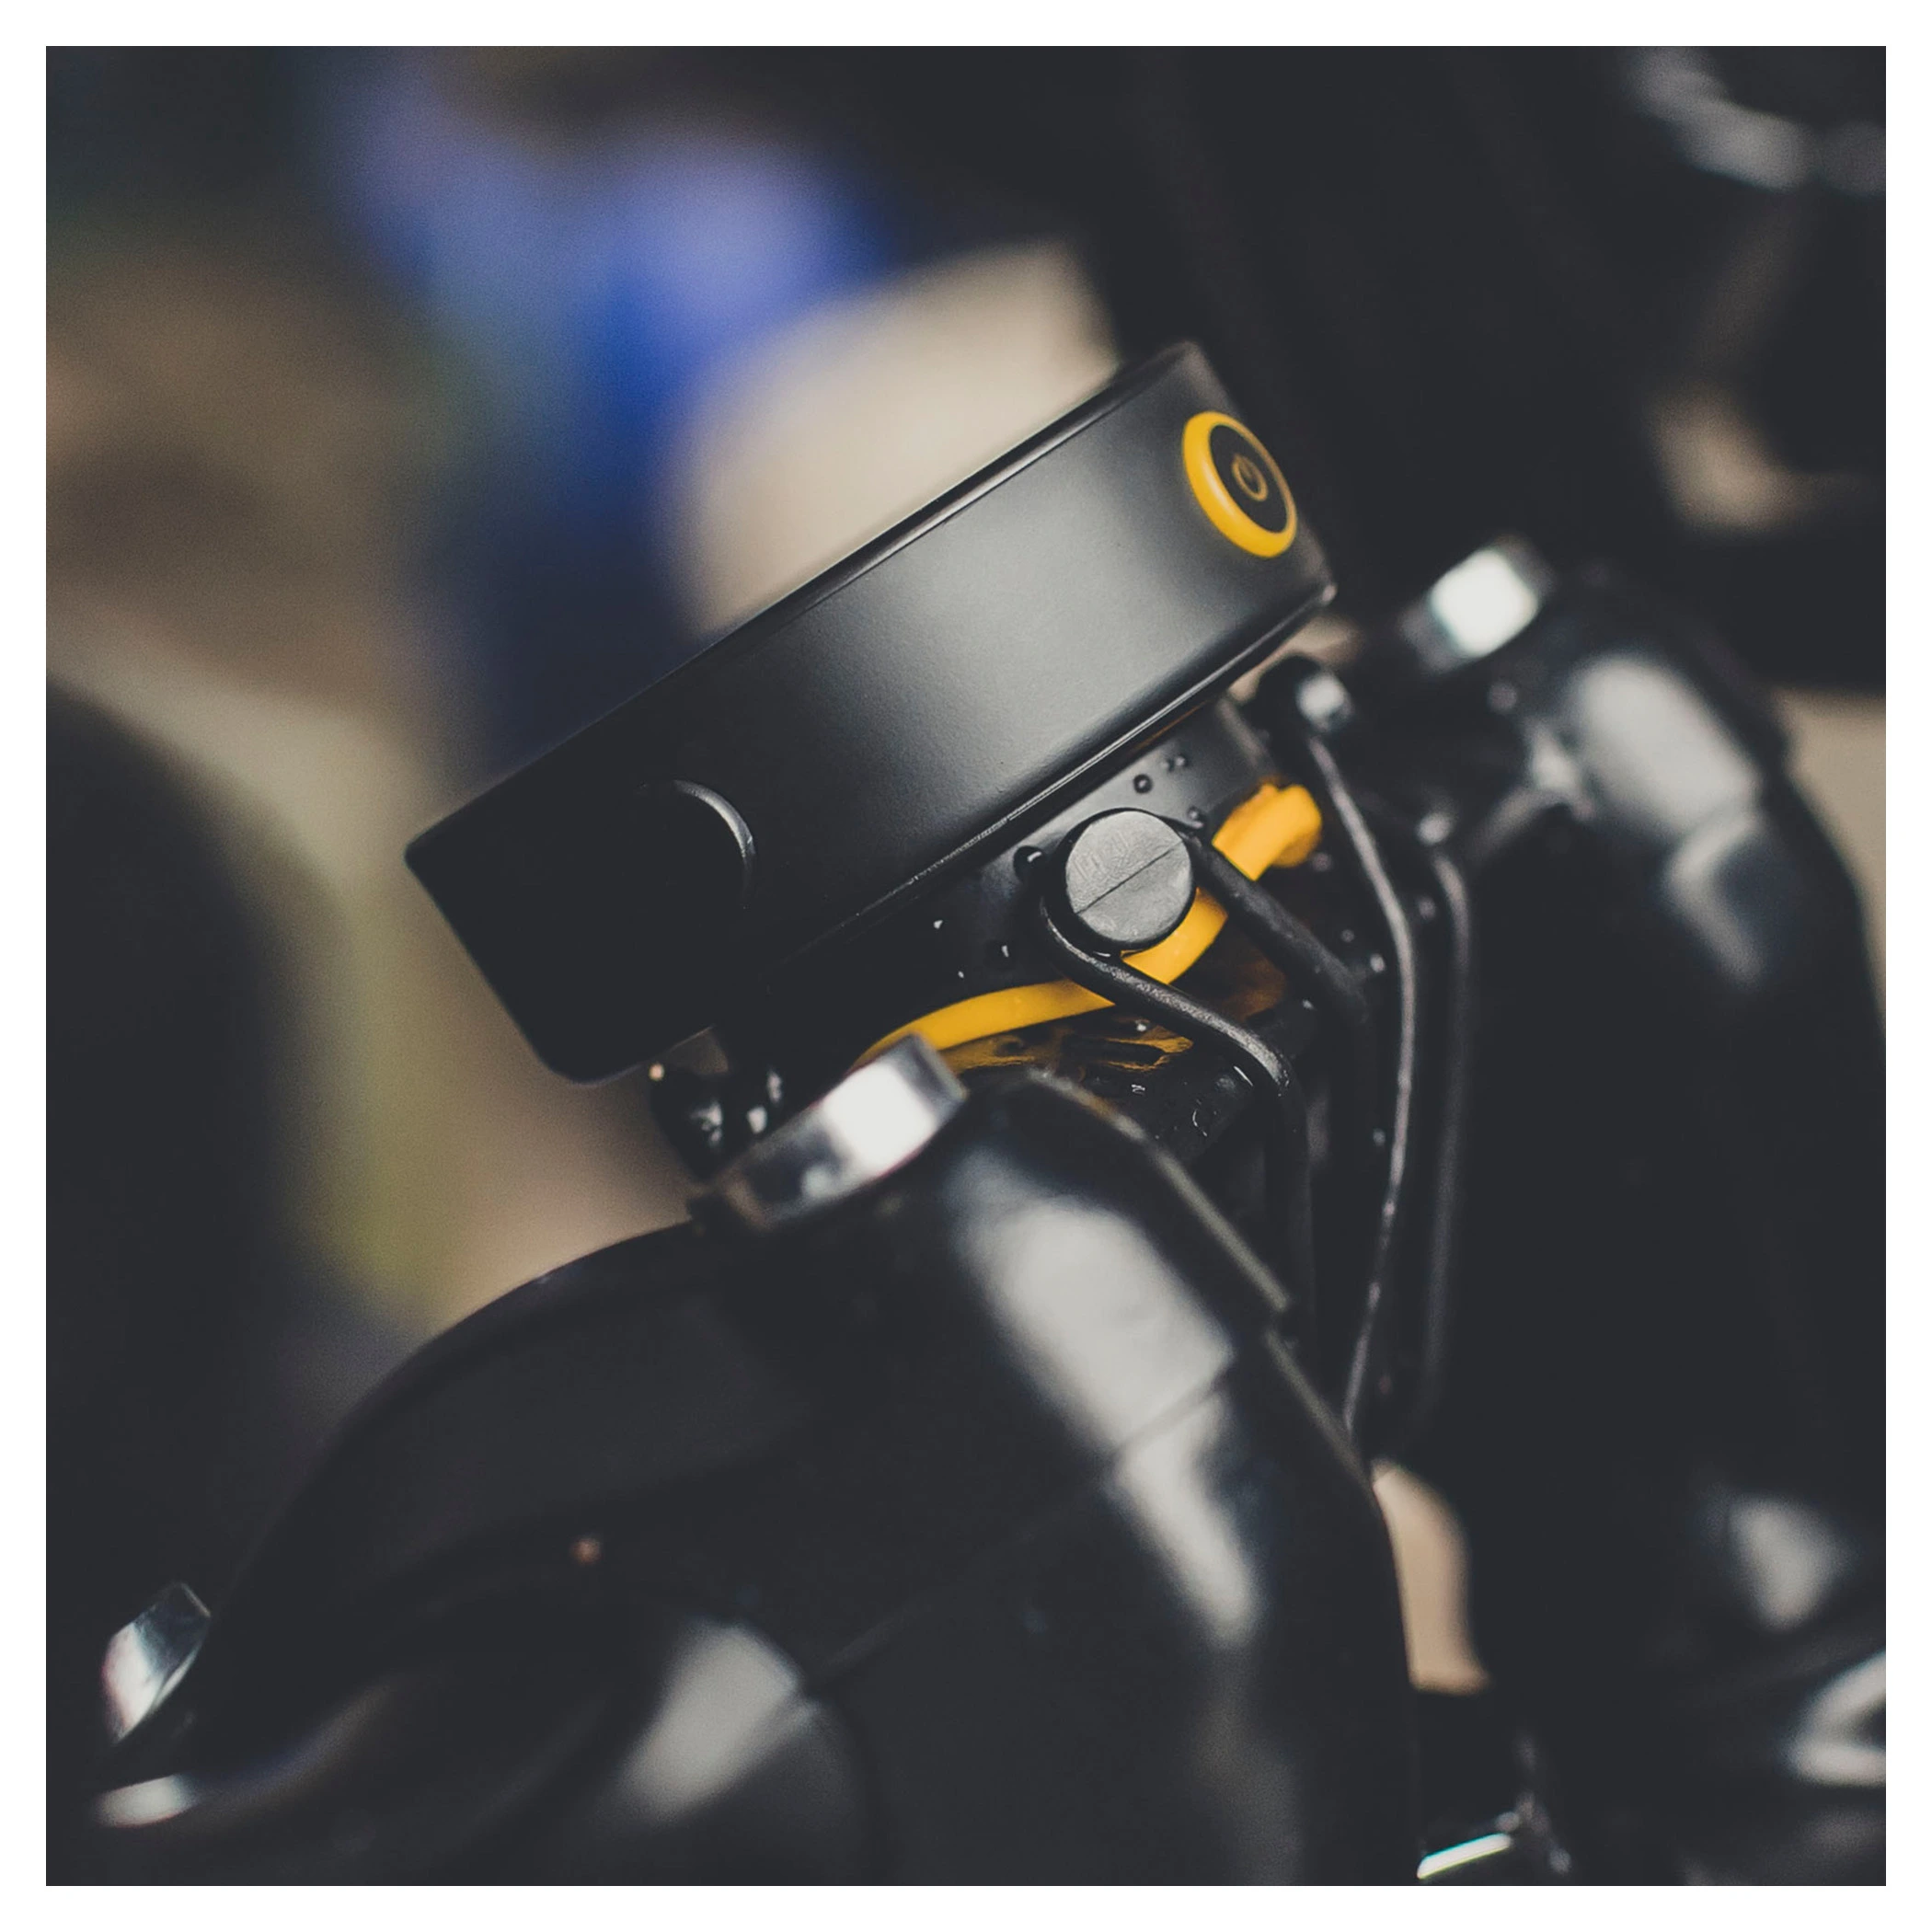 Beeline Moto: Super-simple, minimalist visual navigation for motorcycles